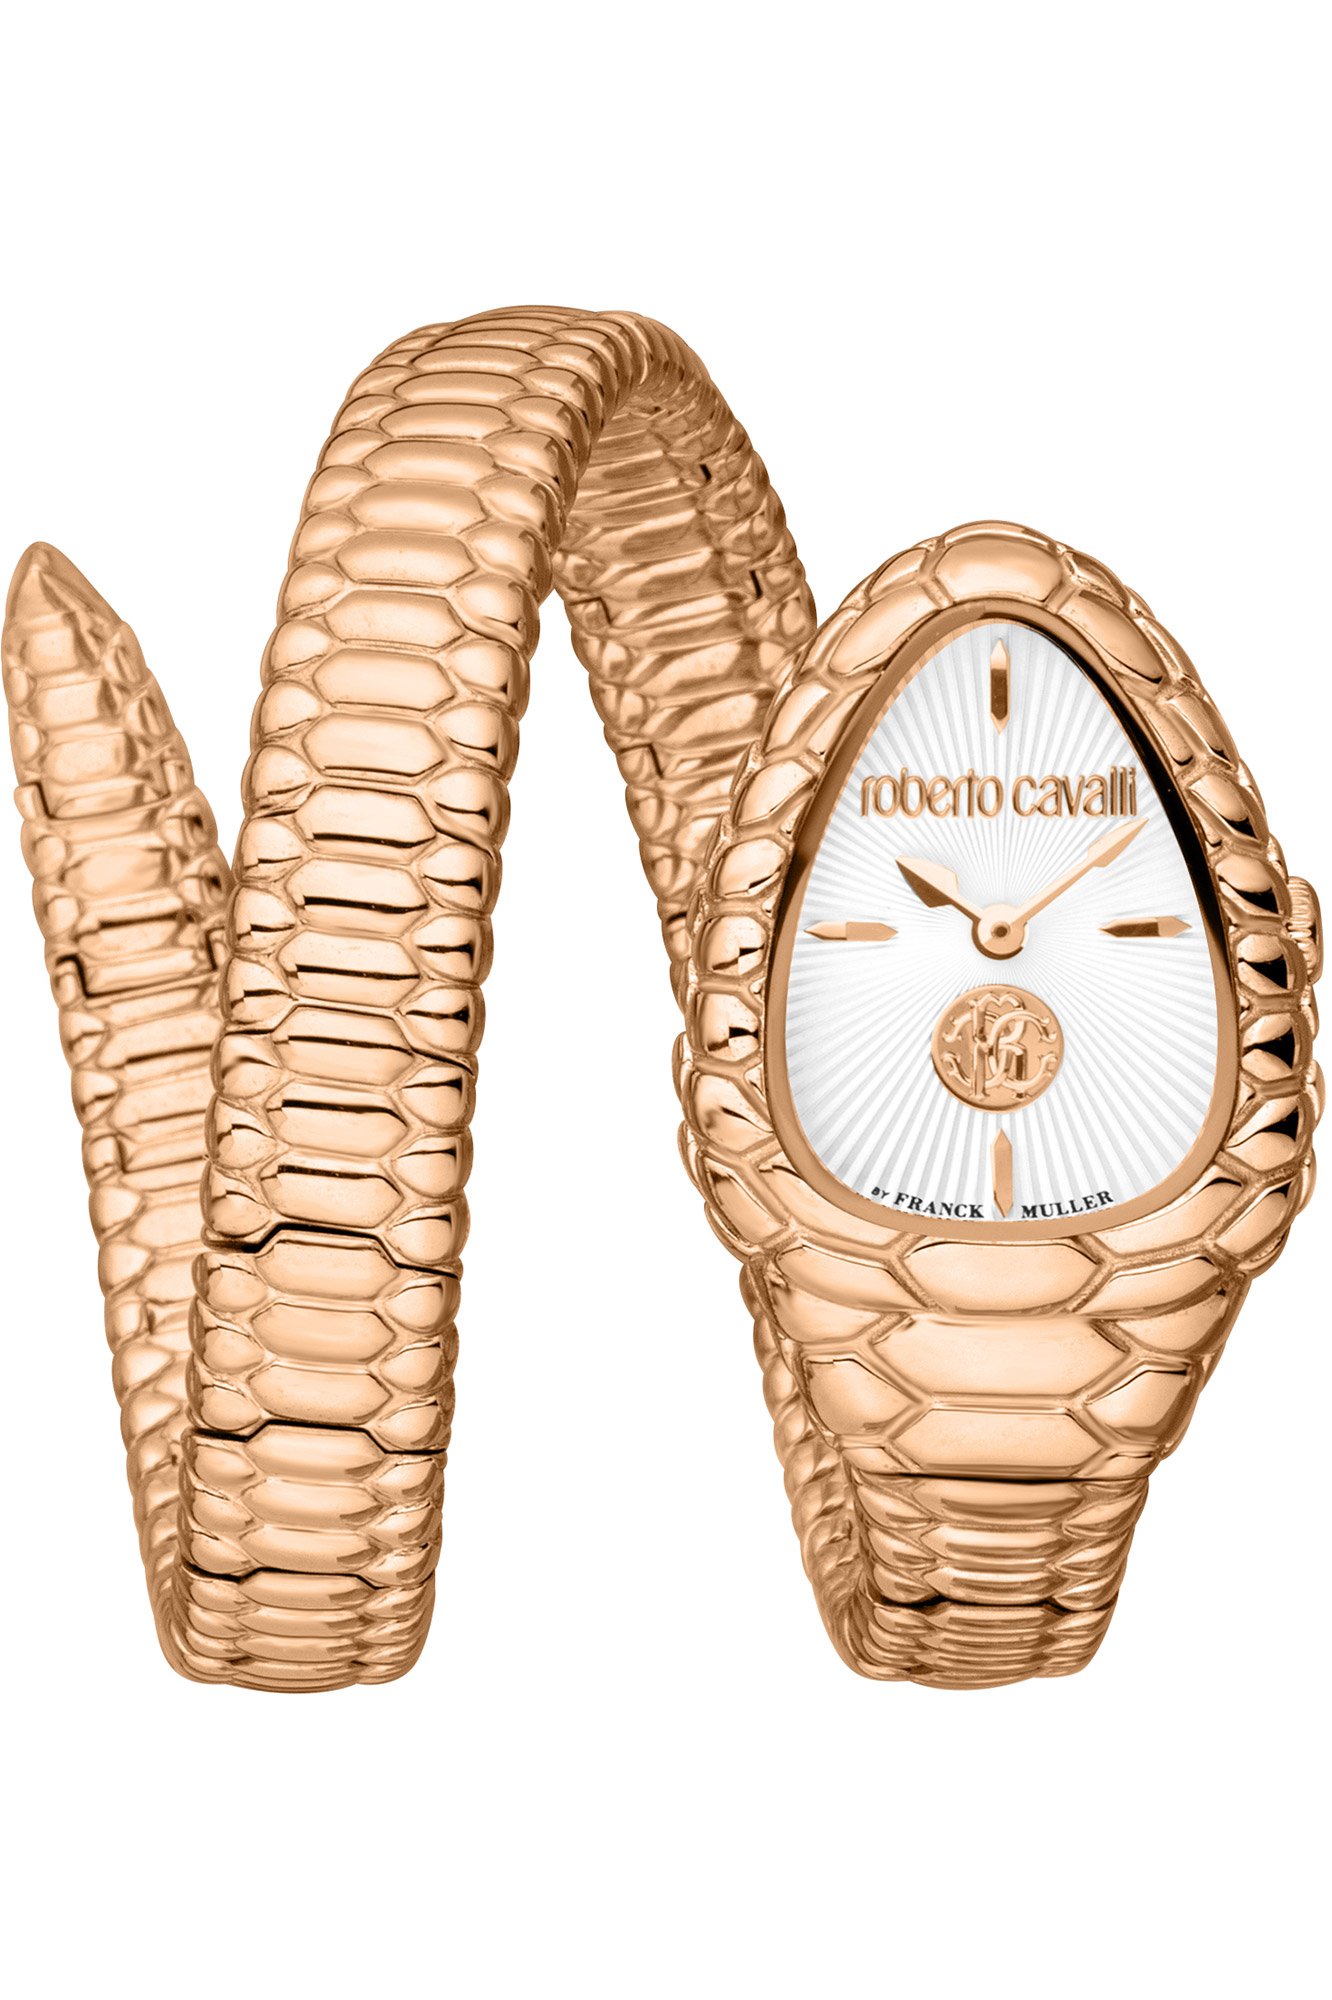 Reloj Roberto Cavalli by Franck Muller rv1l187m0051